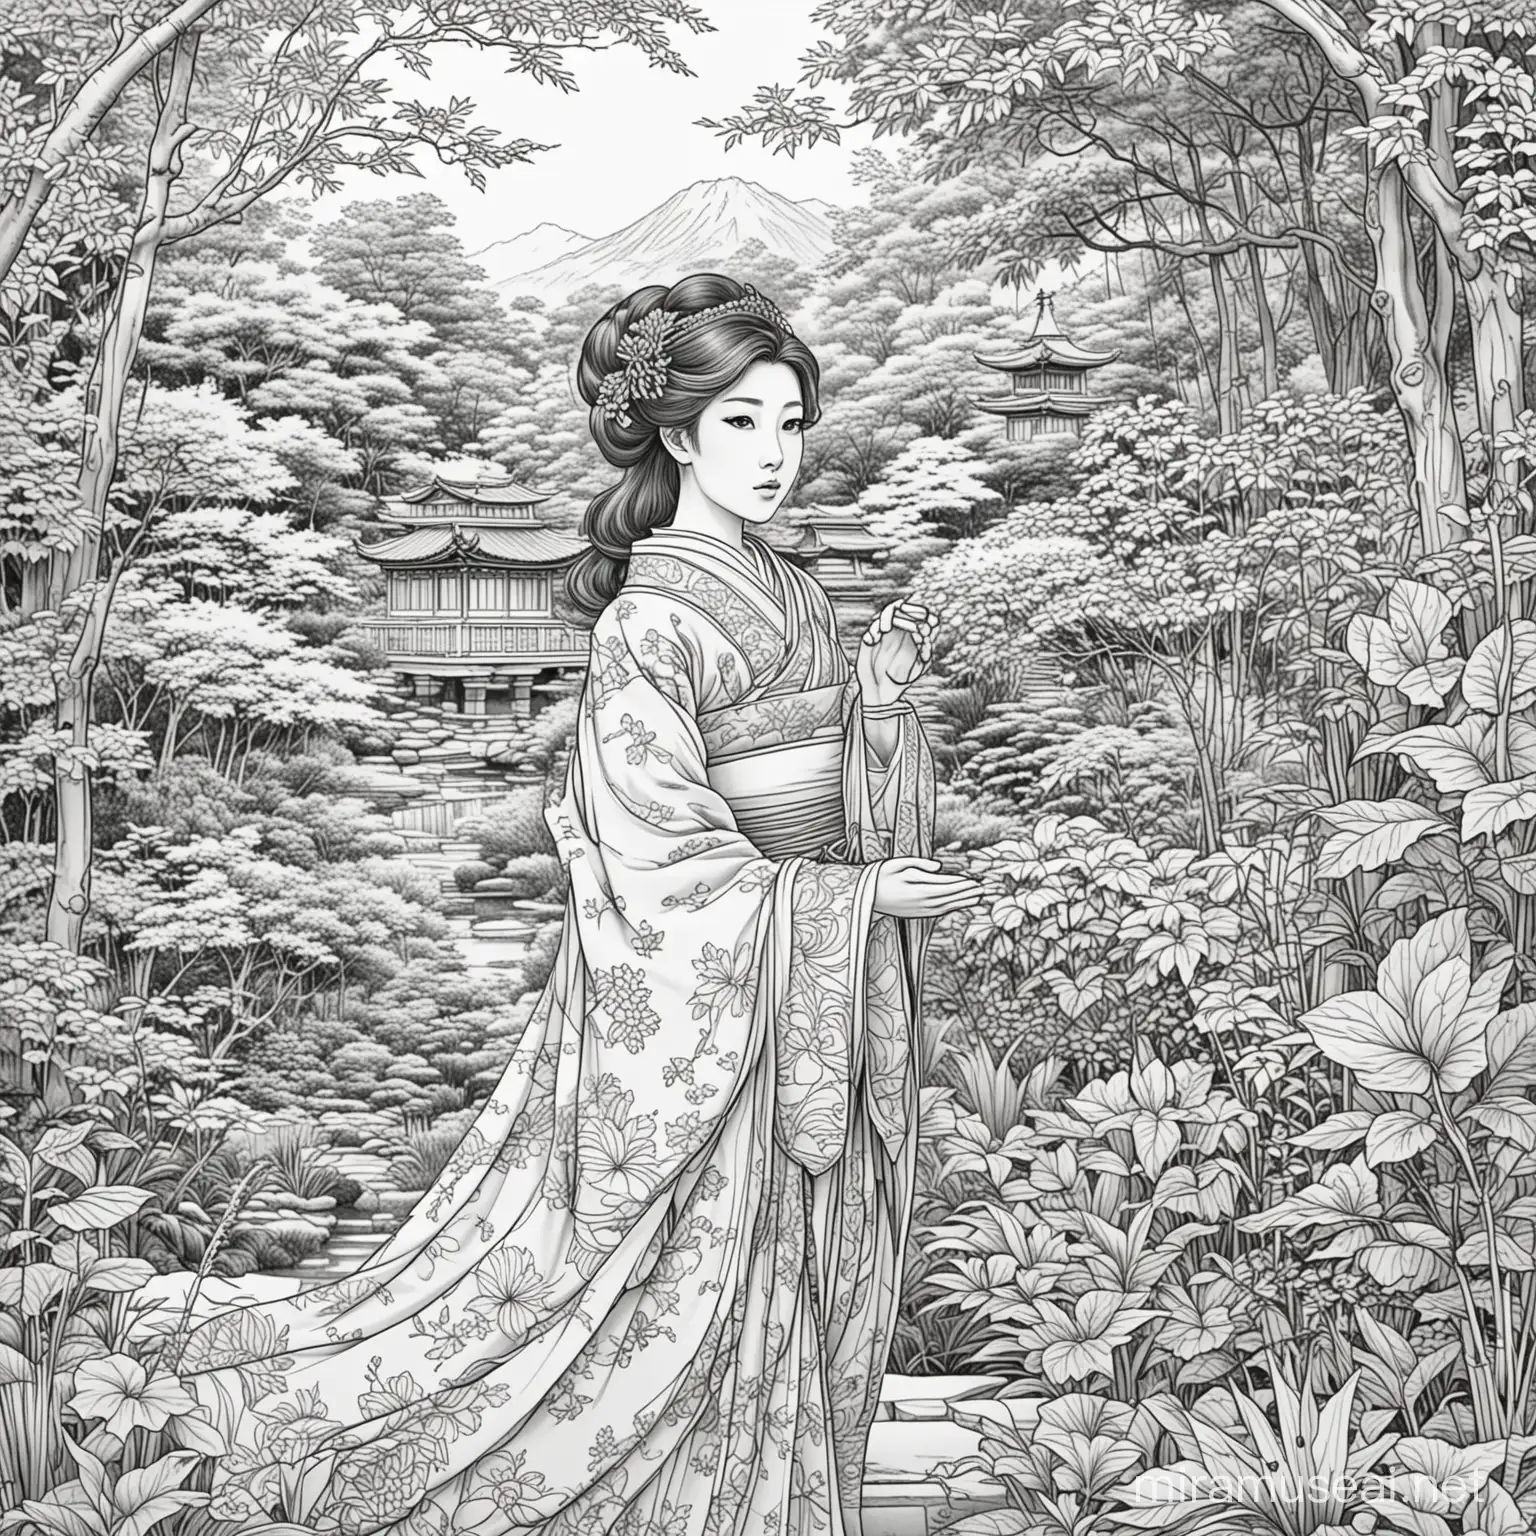 Japanese Princess Gazing at Enchanting Garden in Coloring Book Art